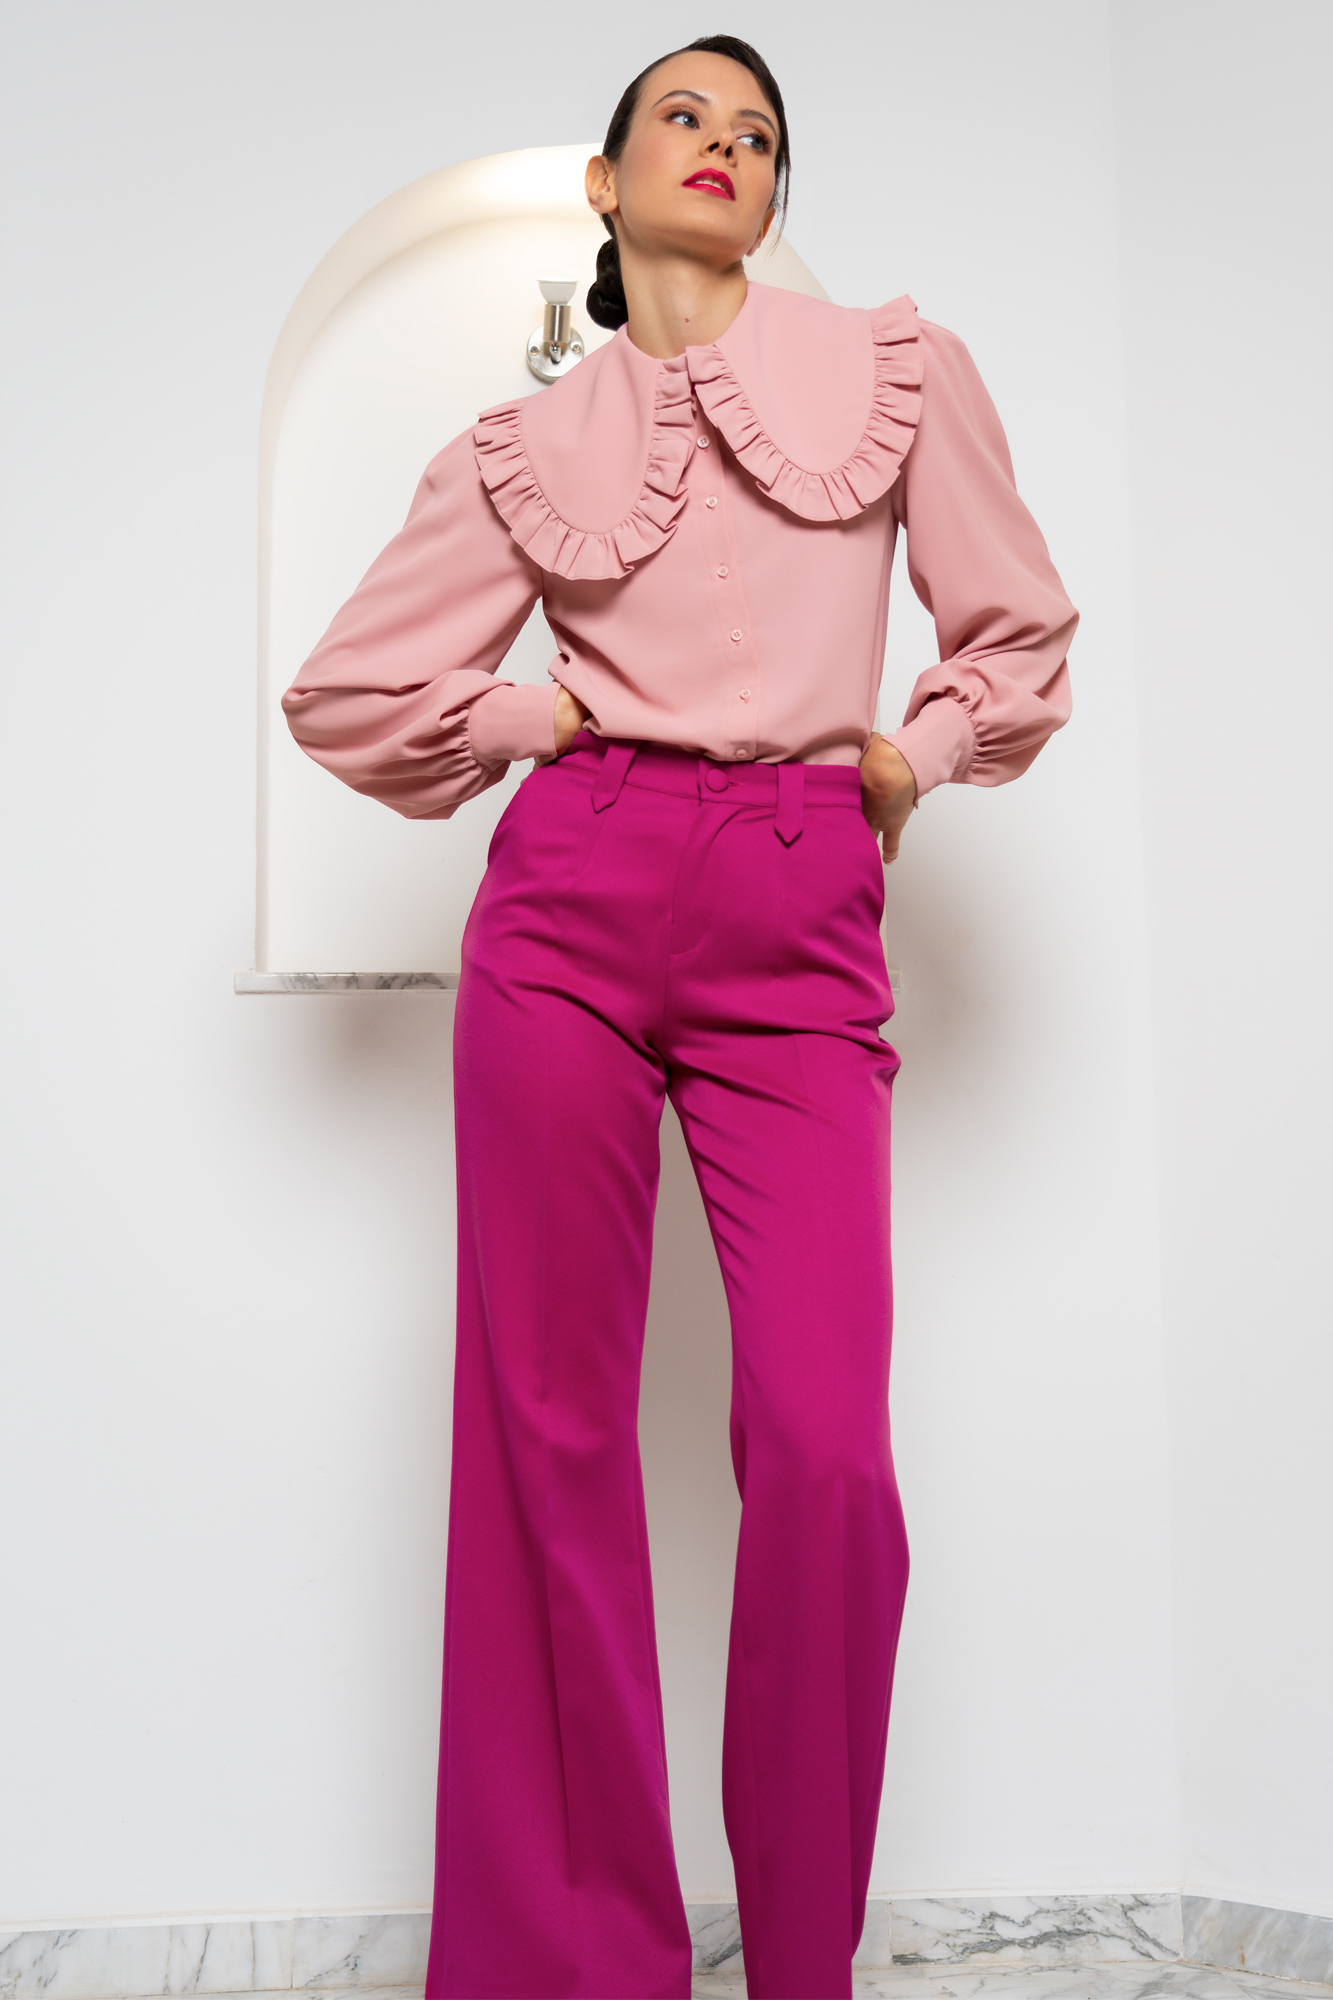 Frilled Statement Collar Pink Shirt And Fuchsia Pants